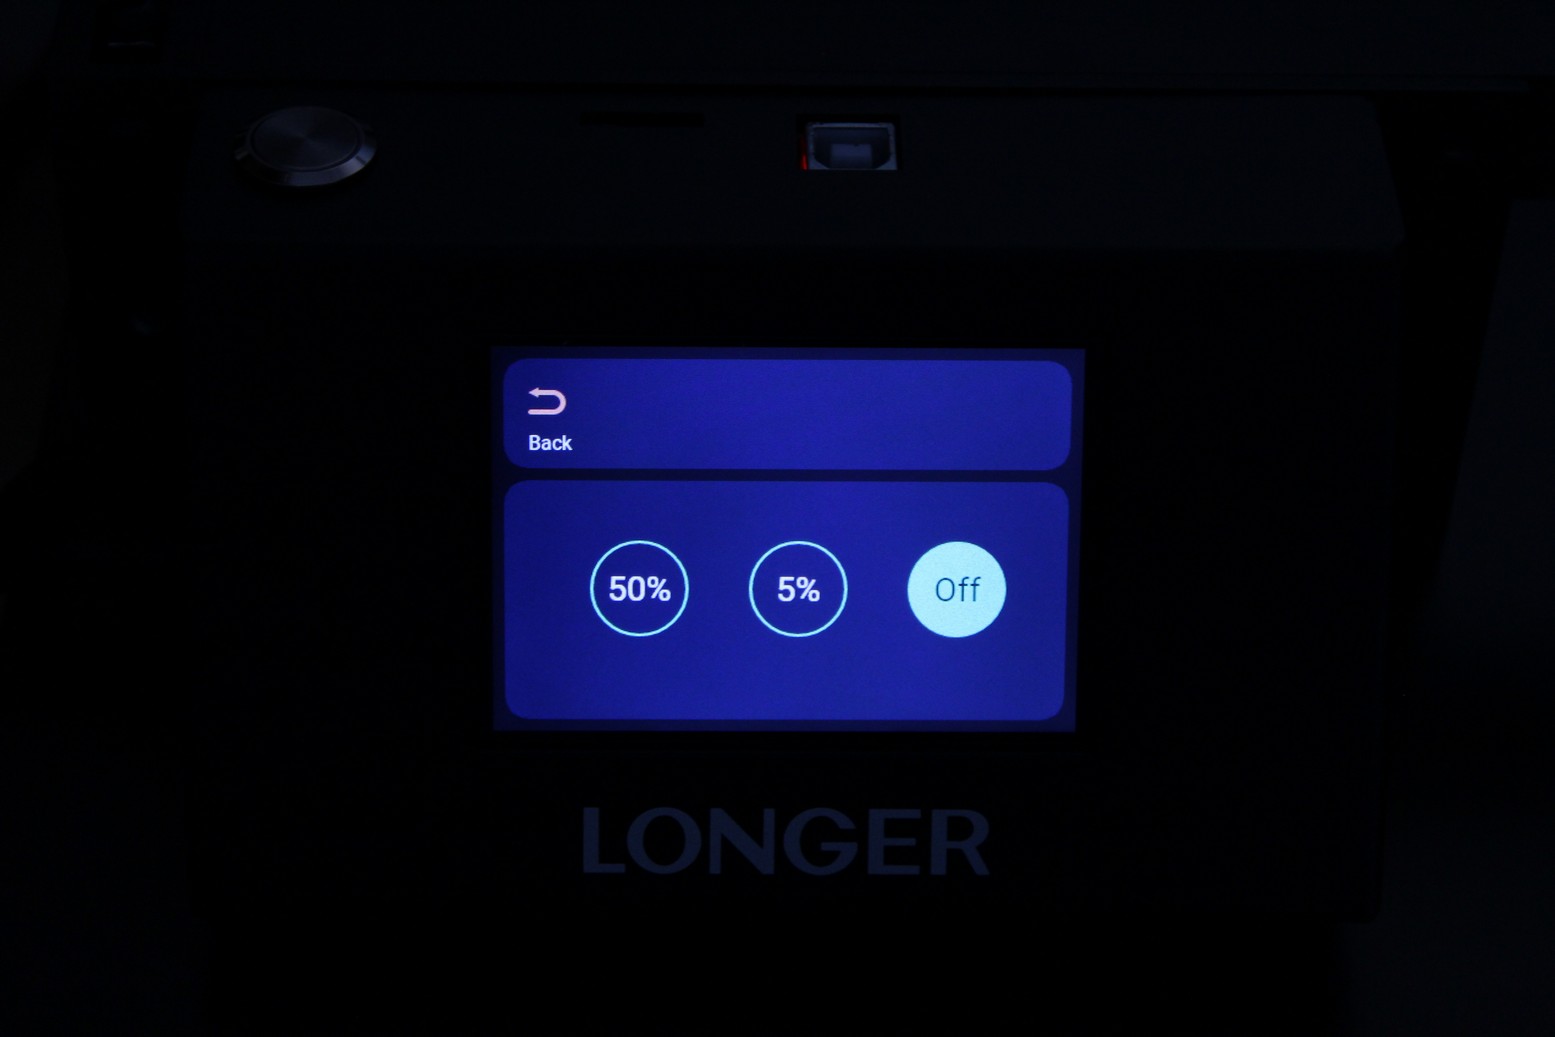 LONGER RAY5 Touchscreen Interface 3 | LONGER RAY5 Laser Engraver Review